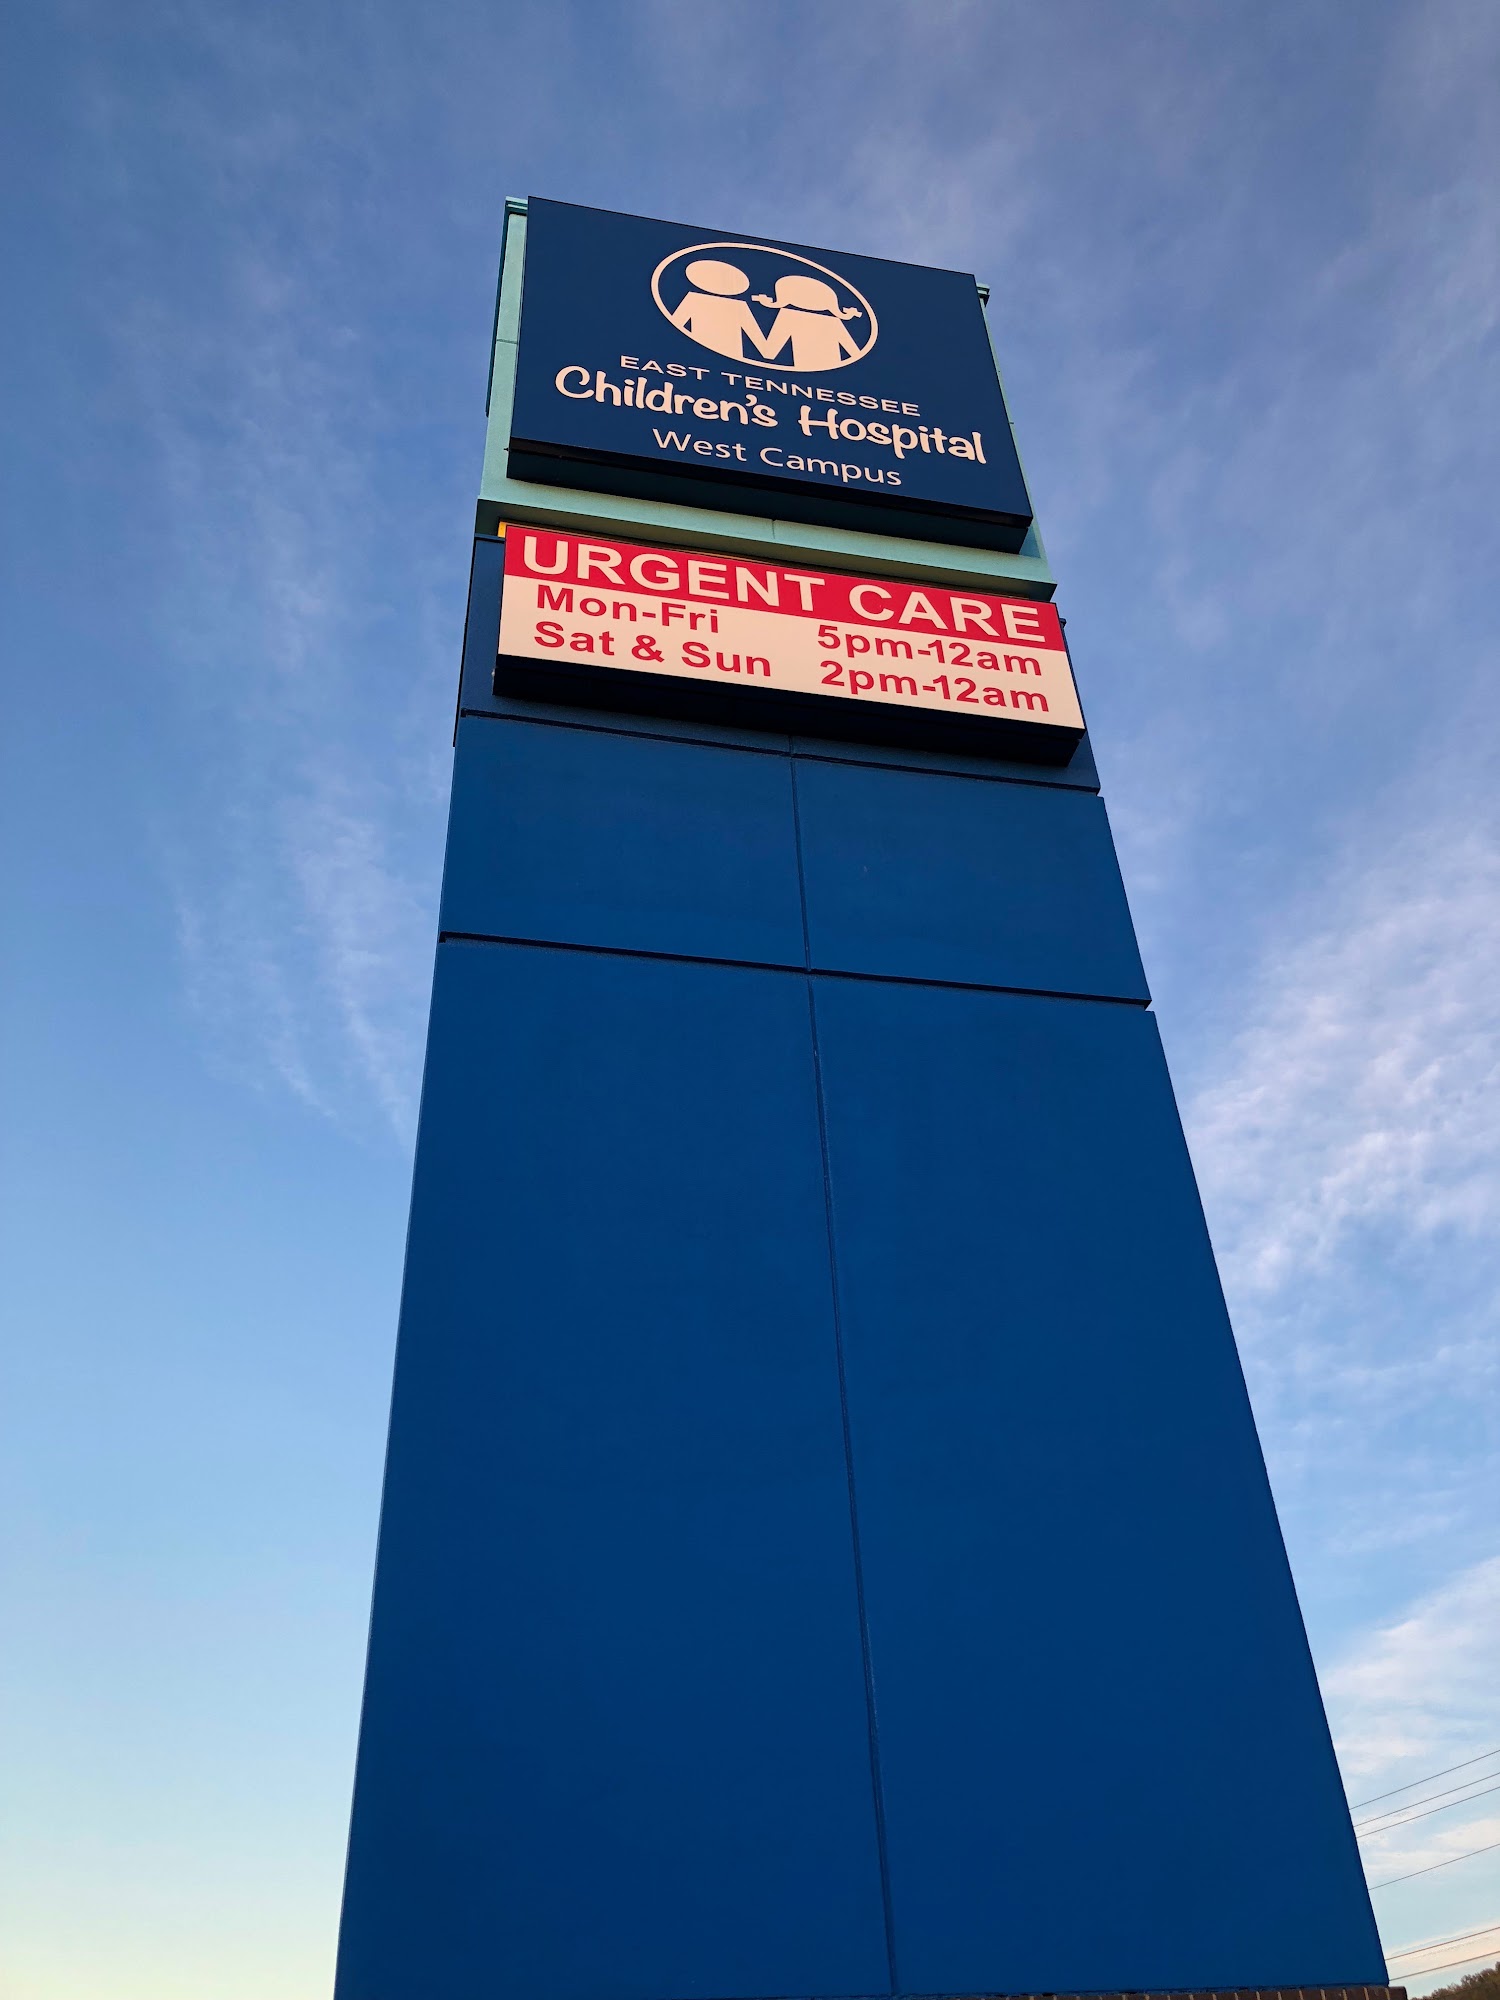 Children's Hospital Urgent Care - West